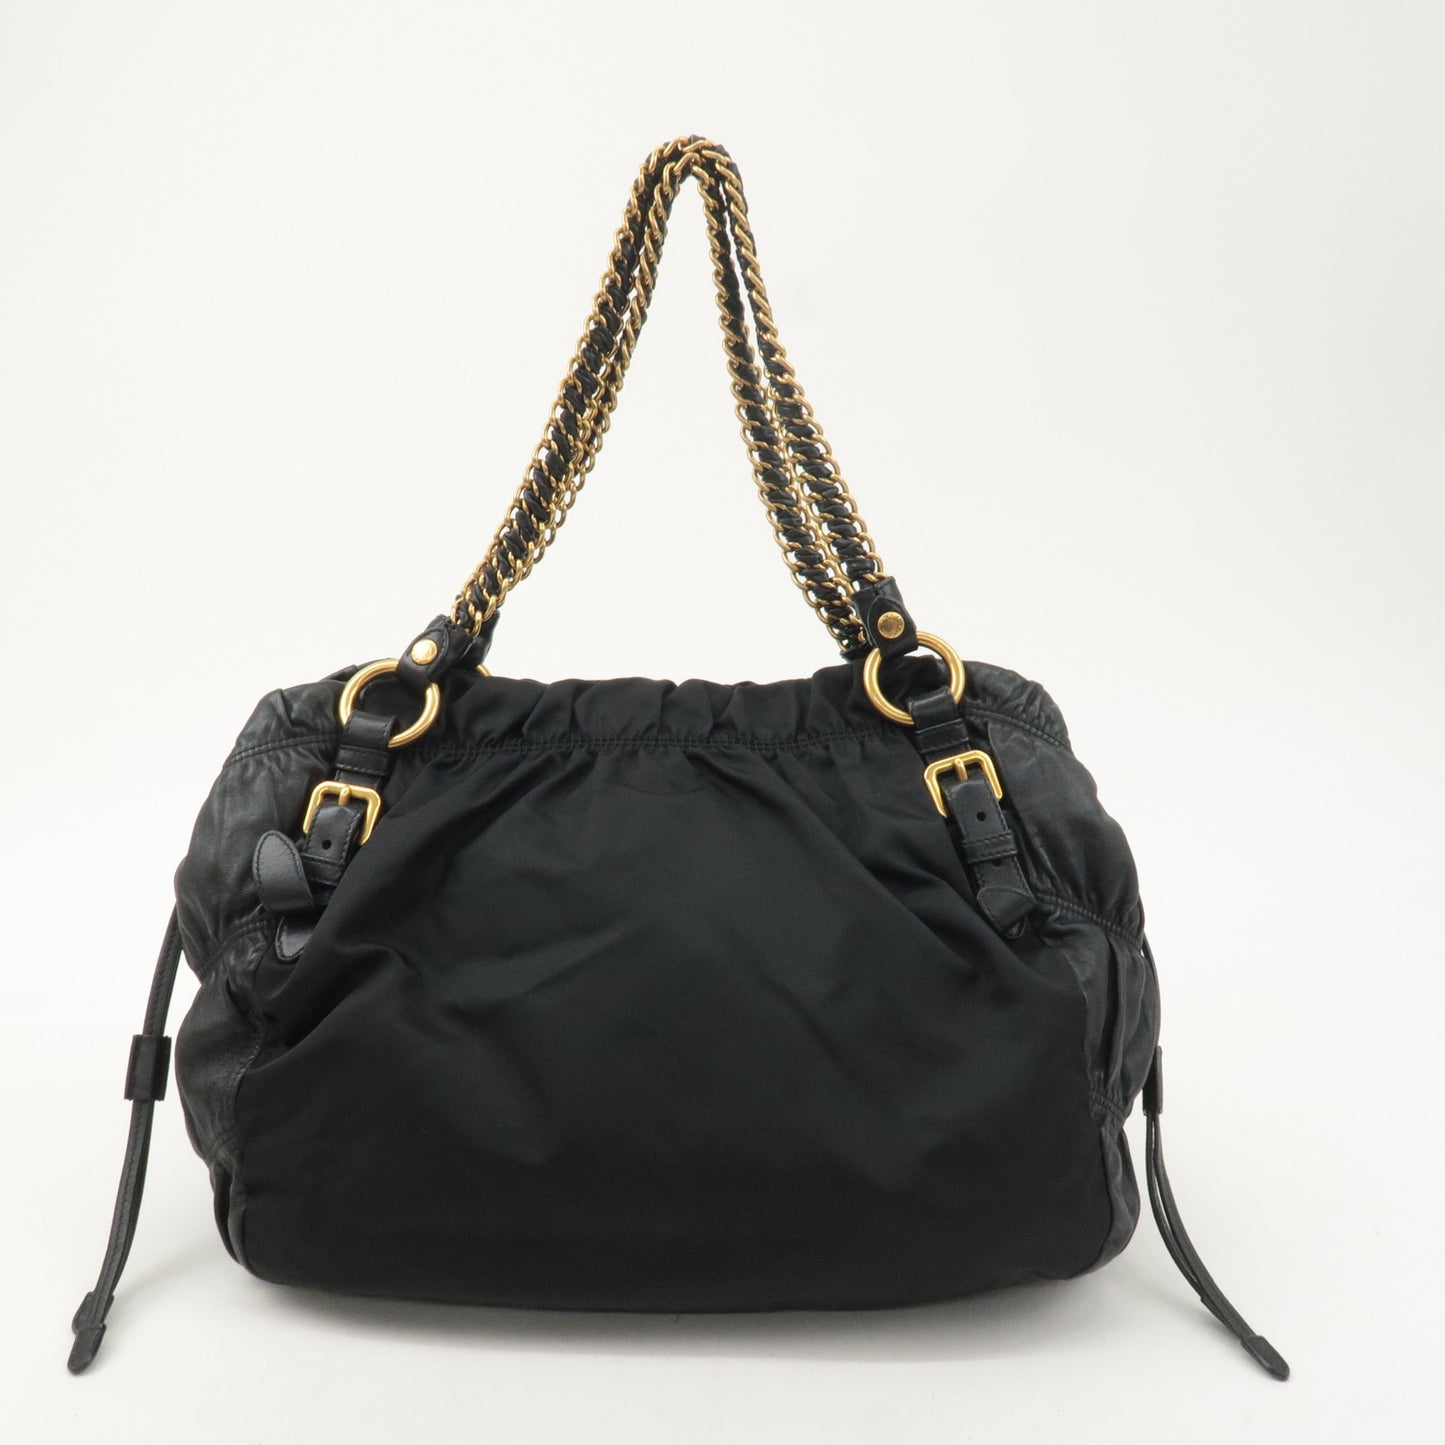 PRADA Nylon Leather Chain Tote Bag Hand Bag Black